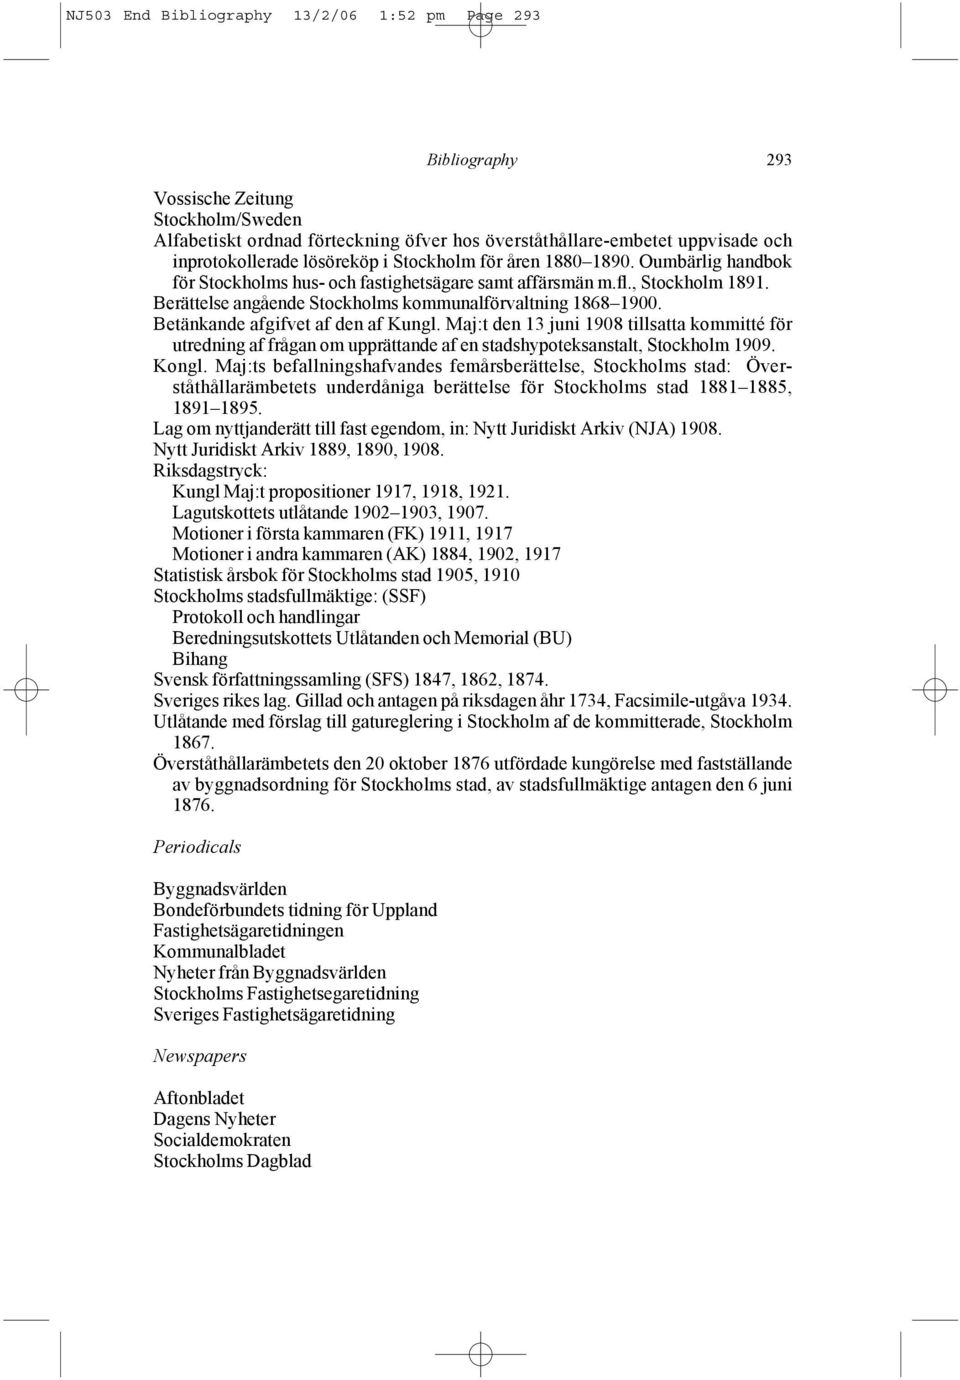 Betänkande afgifvet af den af Kungl. Maj:t den 13 juni 1908 tillsatta kommitté för utredning af frågan om upprättande af en stadshypoteksanstalt, Stockholm 1909. Kongl.